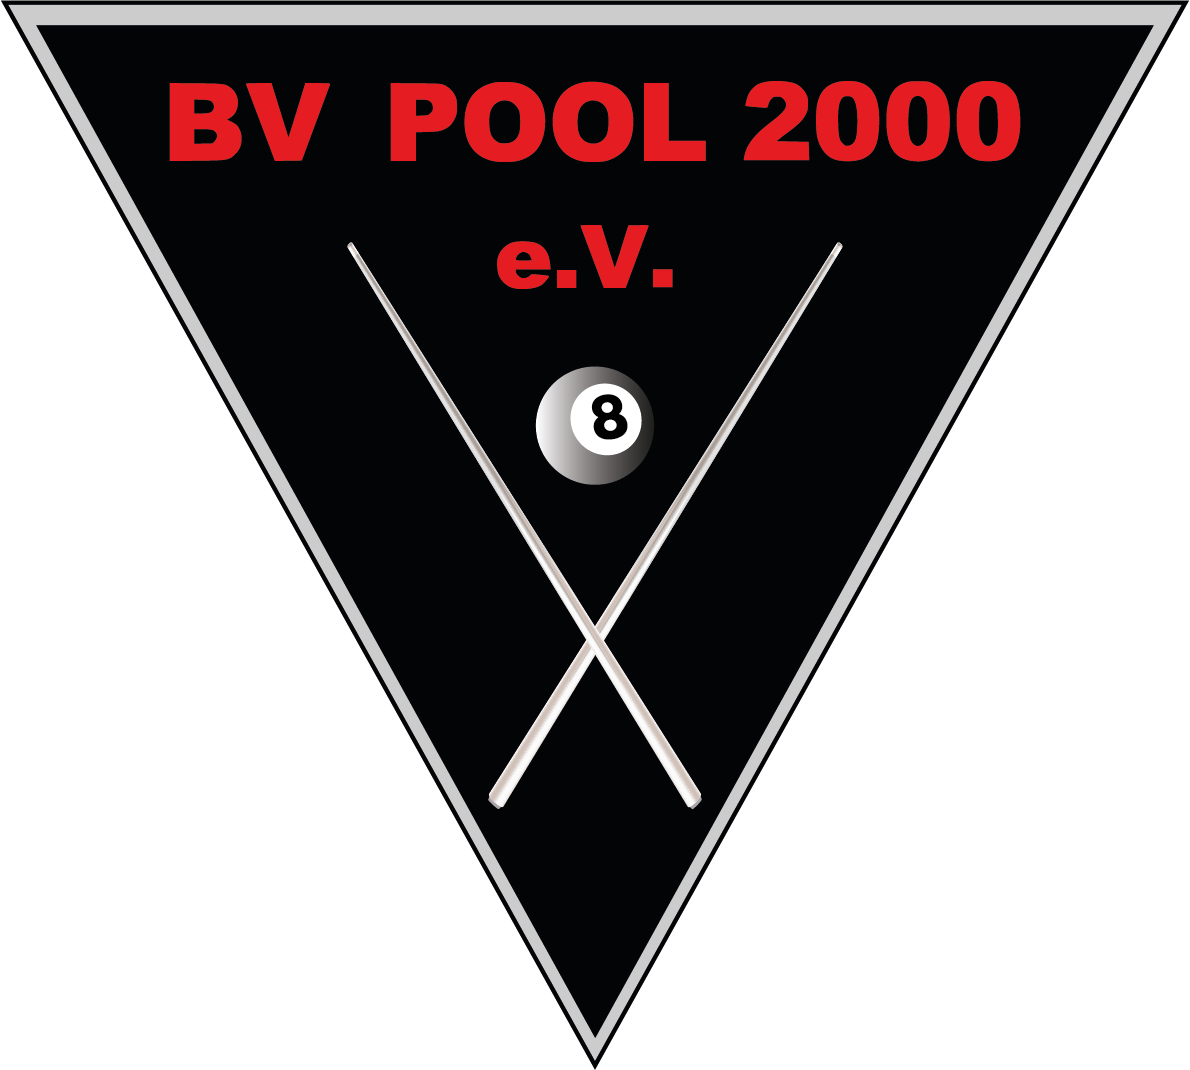 BV Pool 2000 e.V.